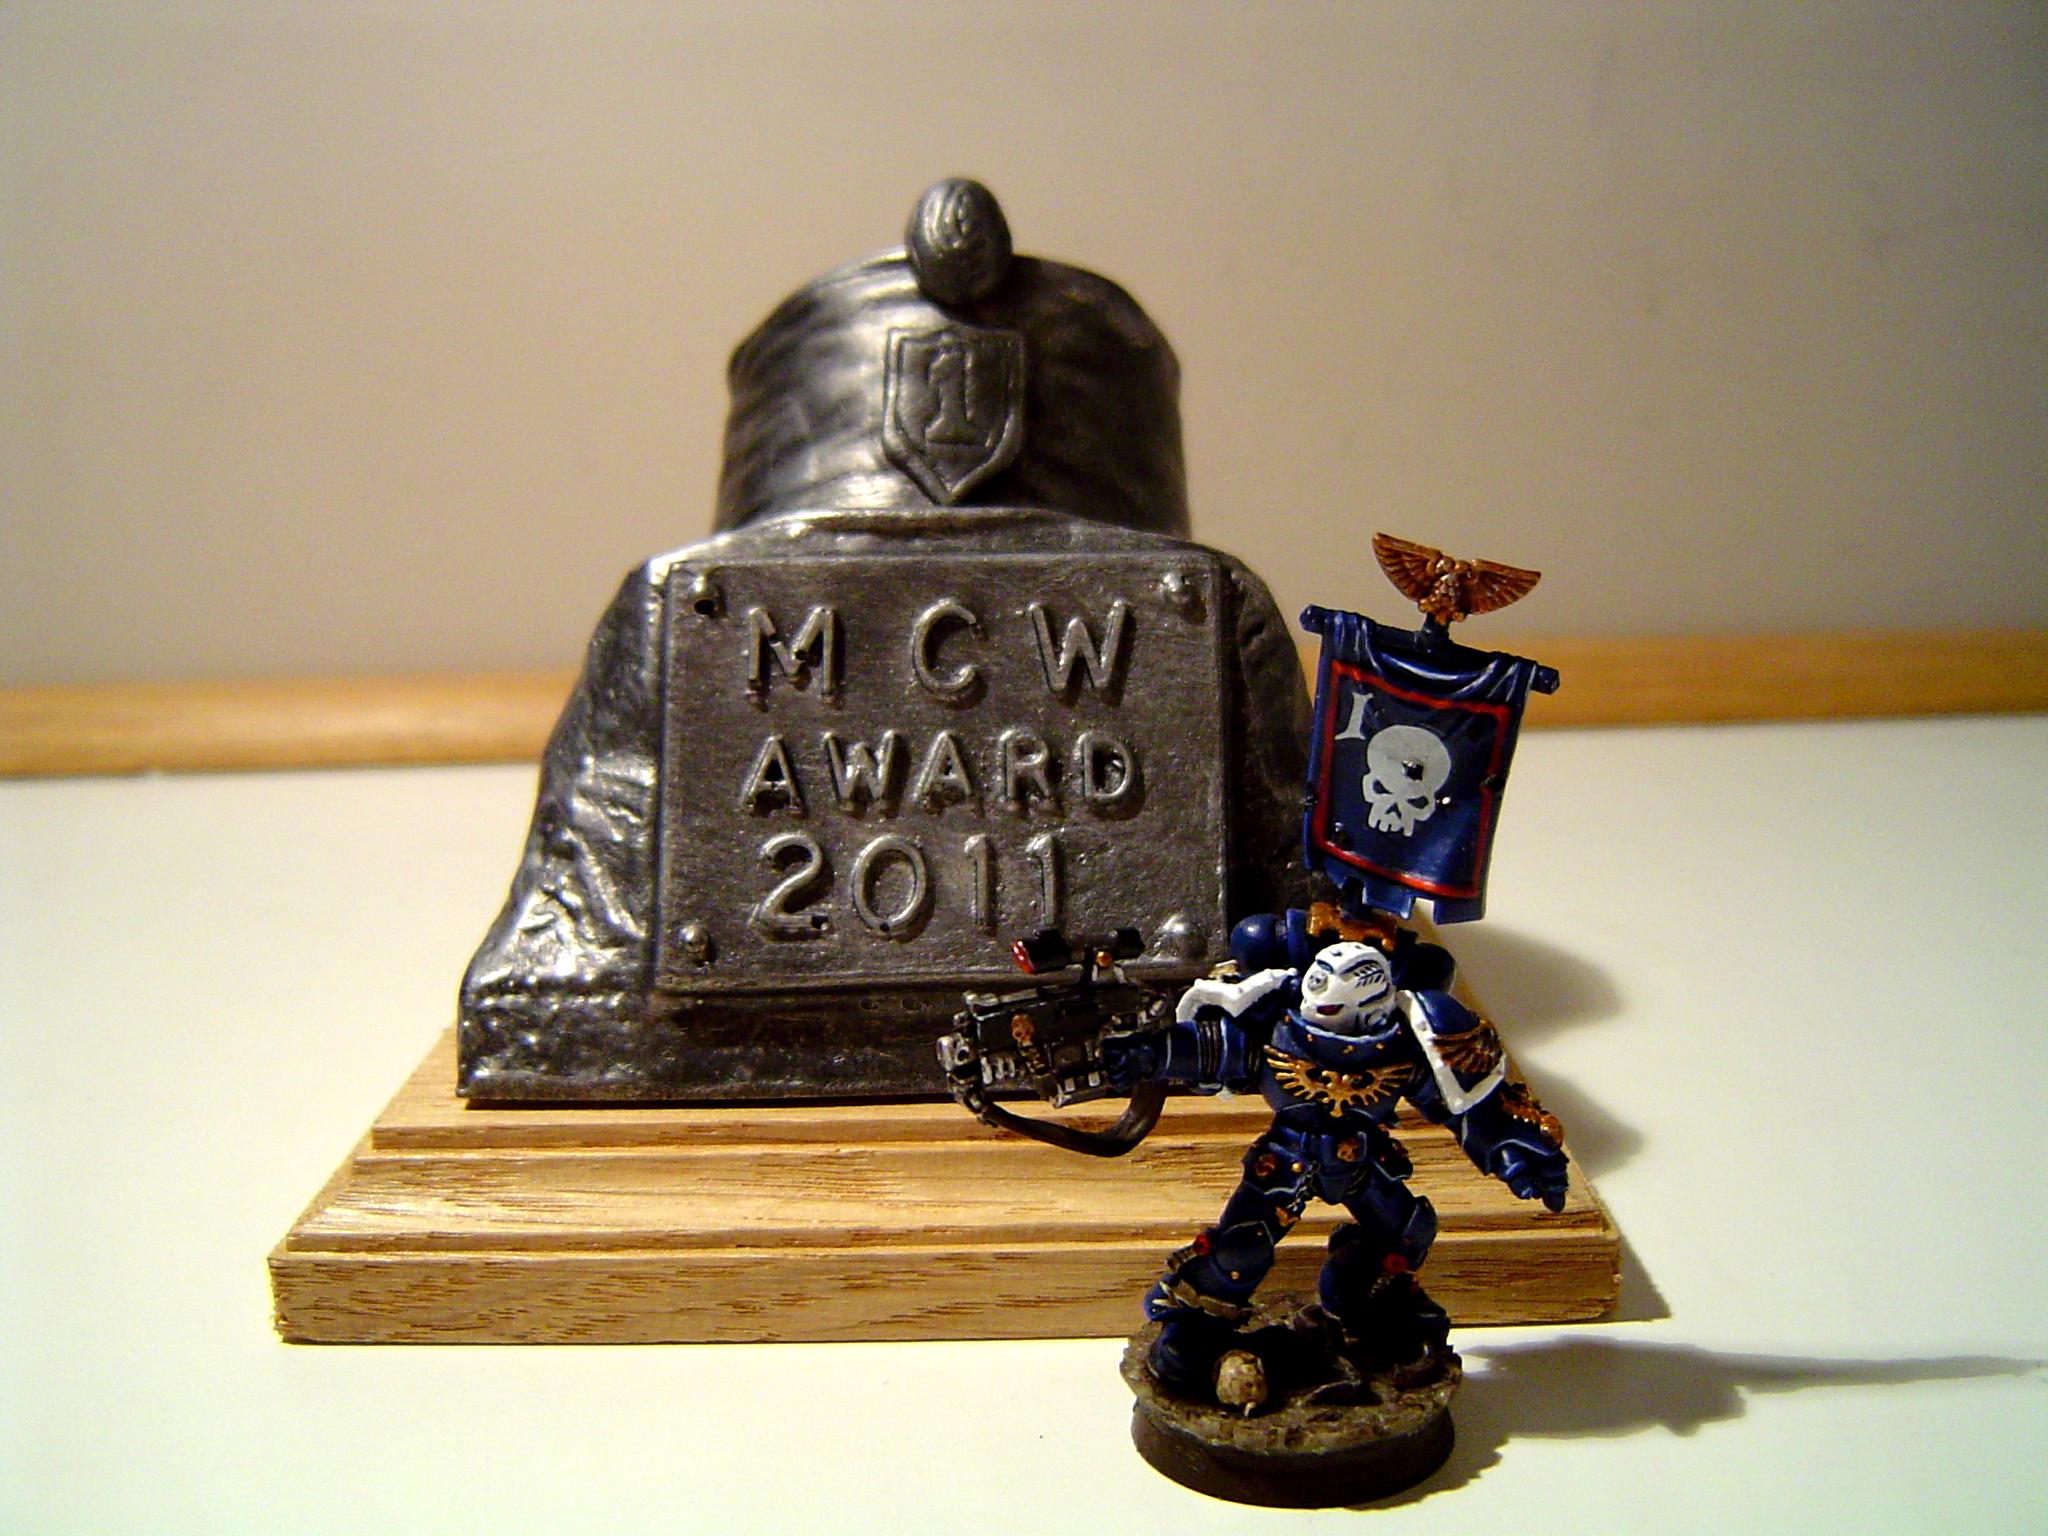 Award, Mcw Award 2011, Sternguard, Ultramarines, Veteran